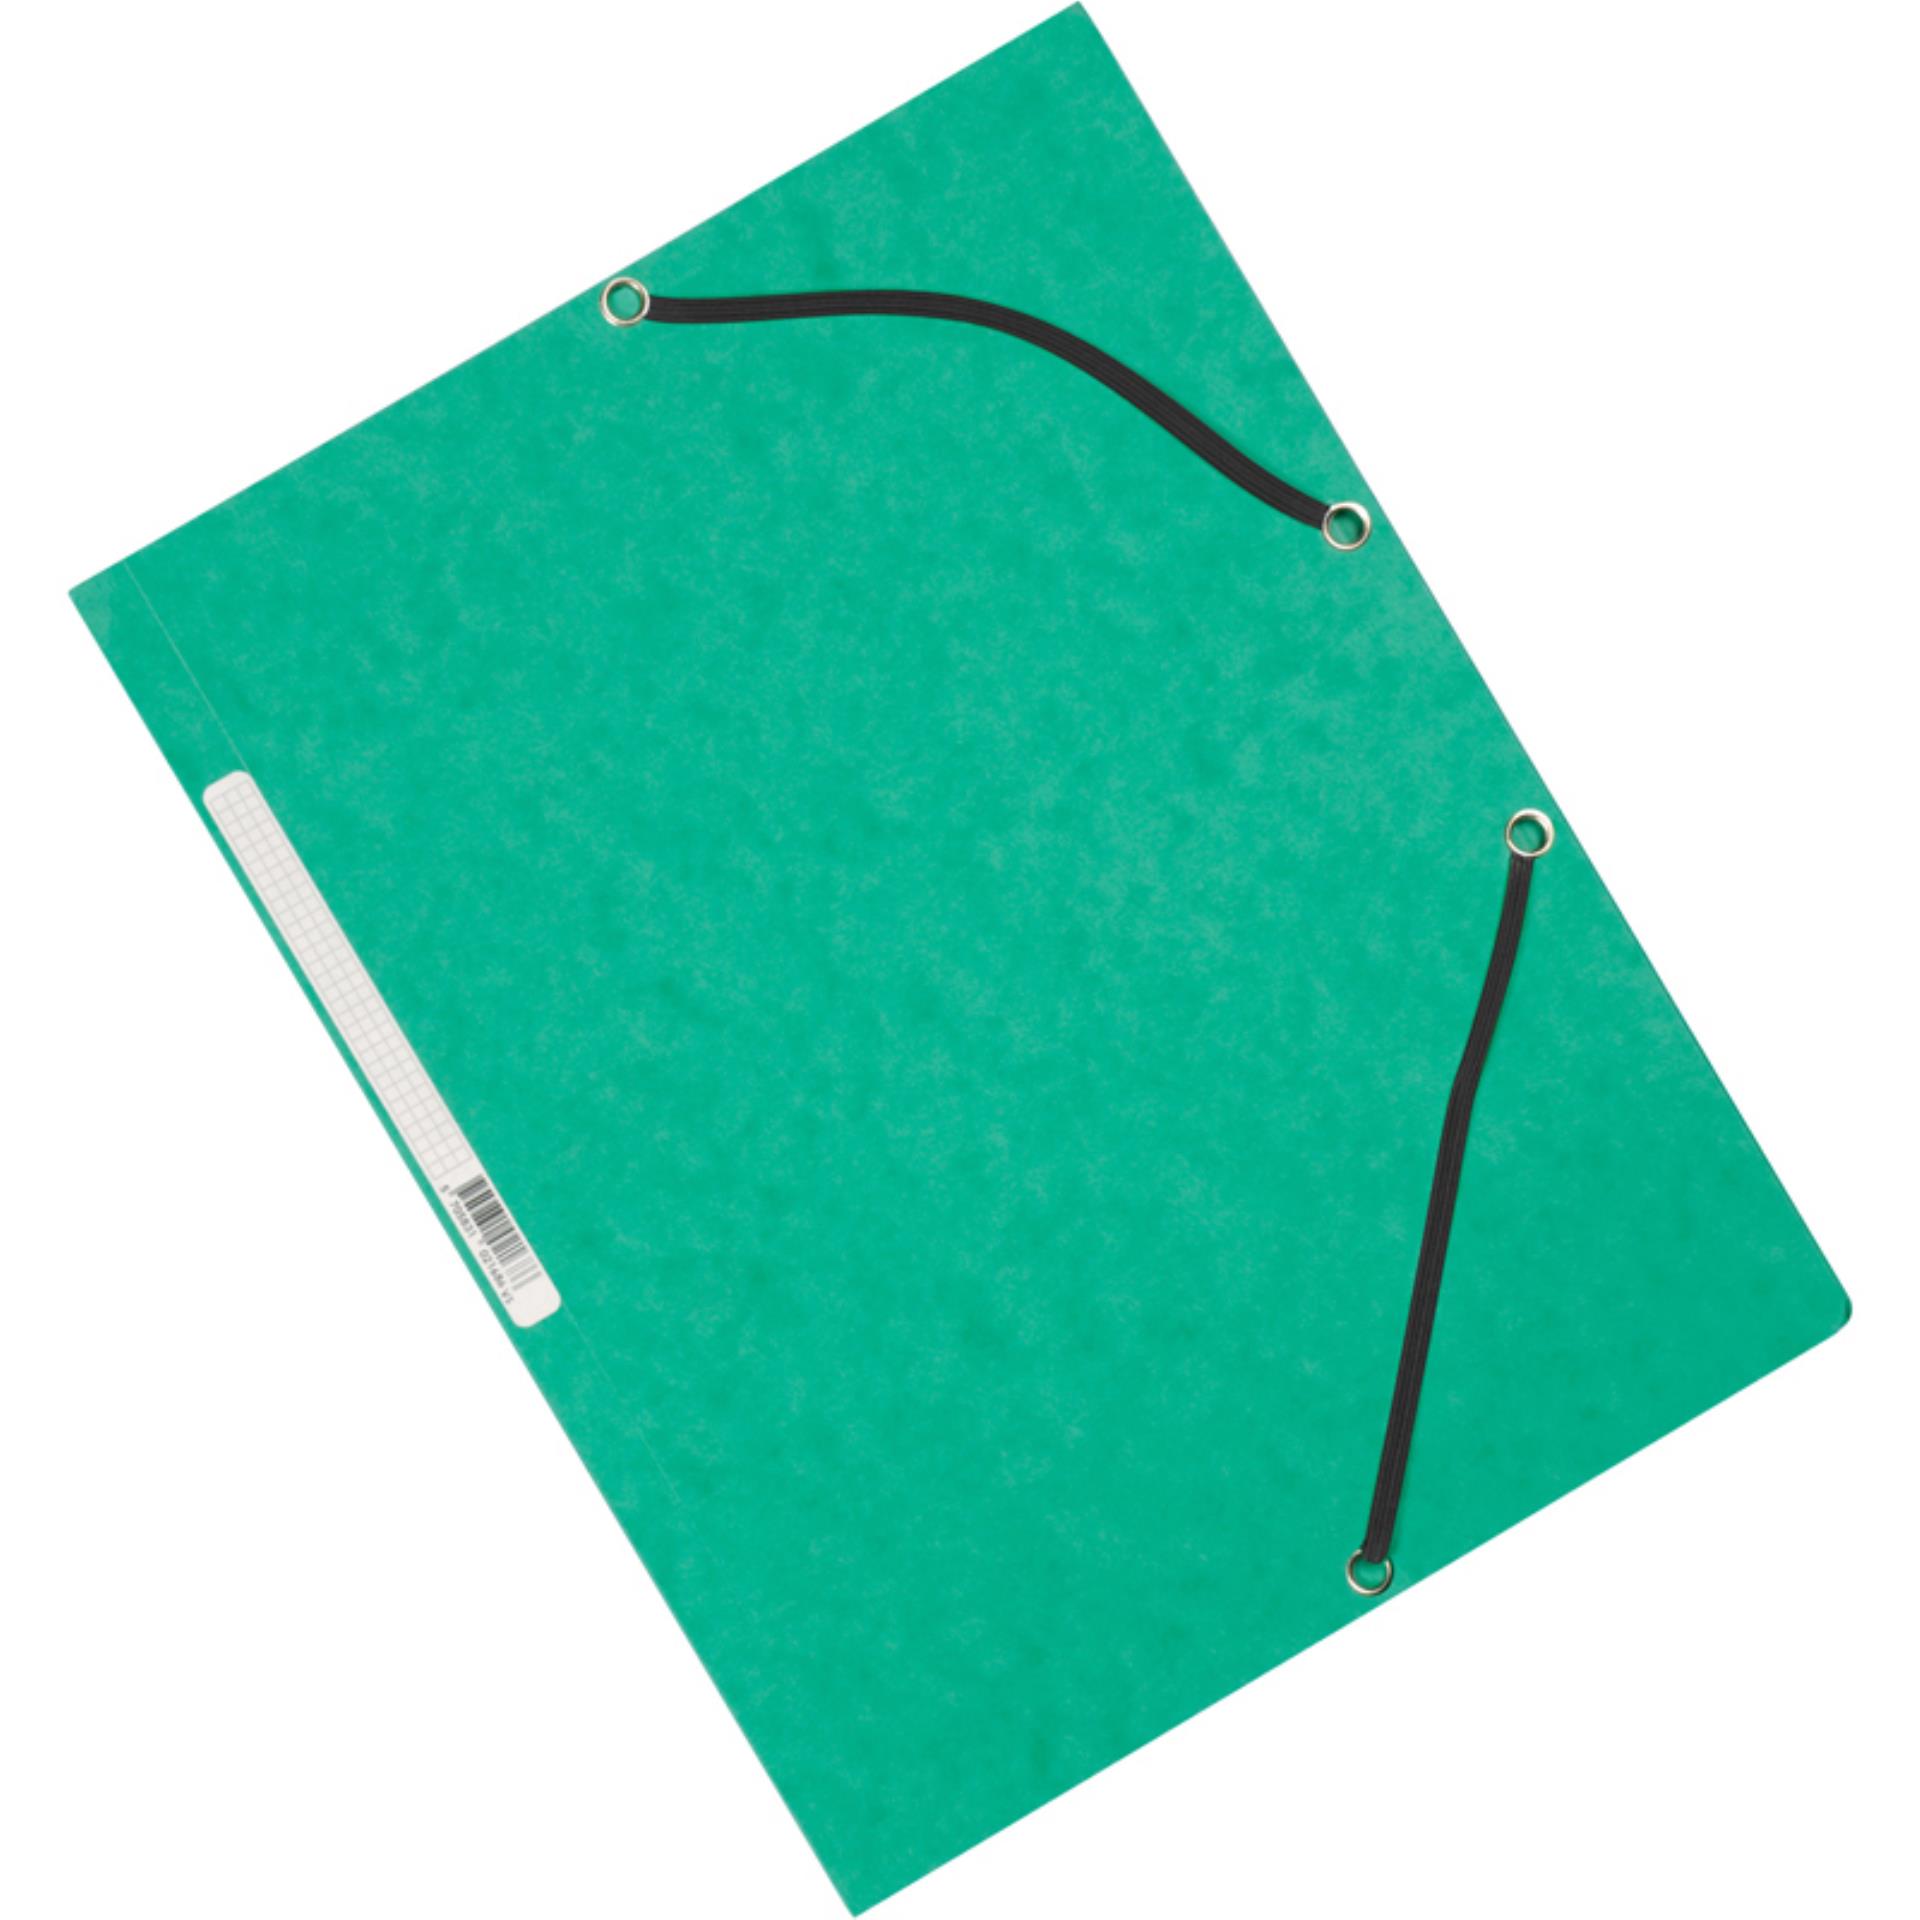 Desky s chlopněmi a gumičkou Q-Connect, zelené